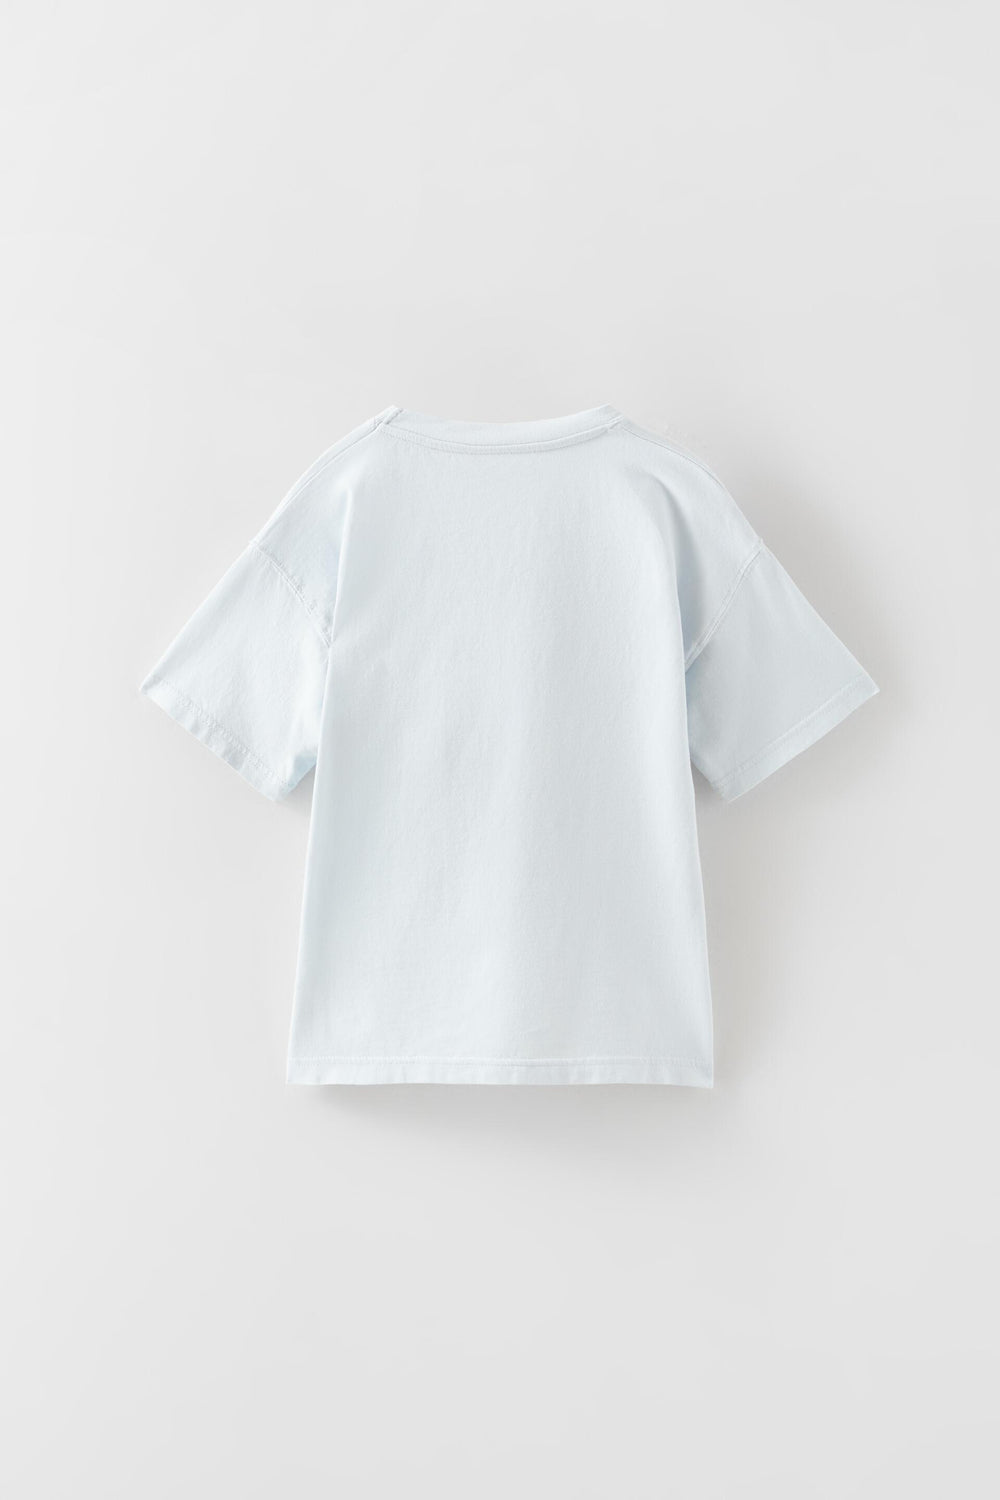 T-Shirt marque_Zara, genre_Garçon, Enfant Moudda Tunisie3